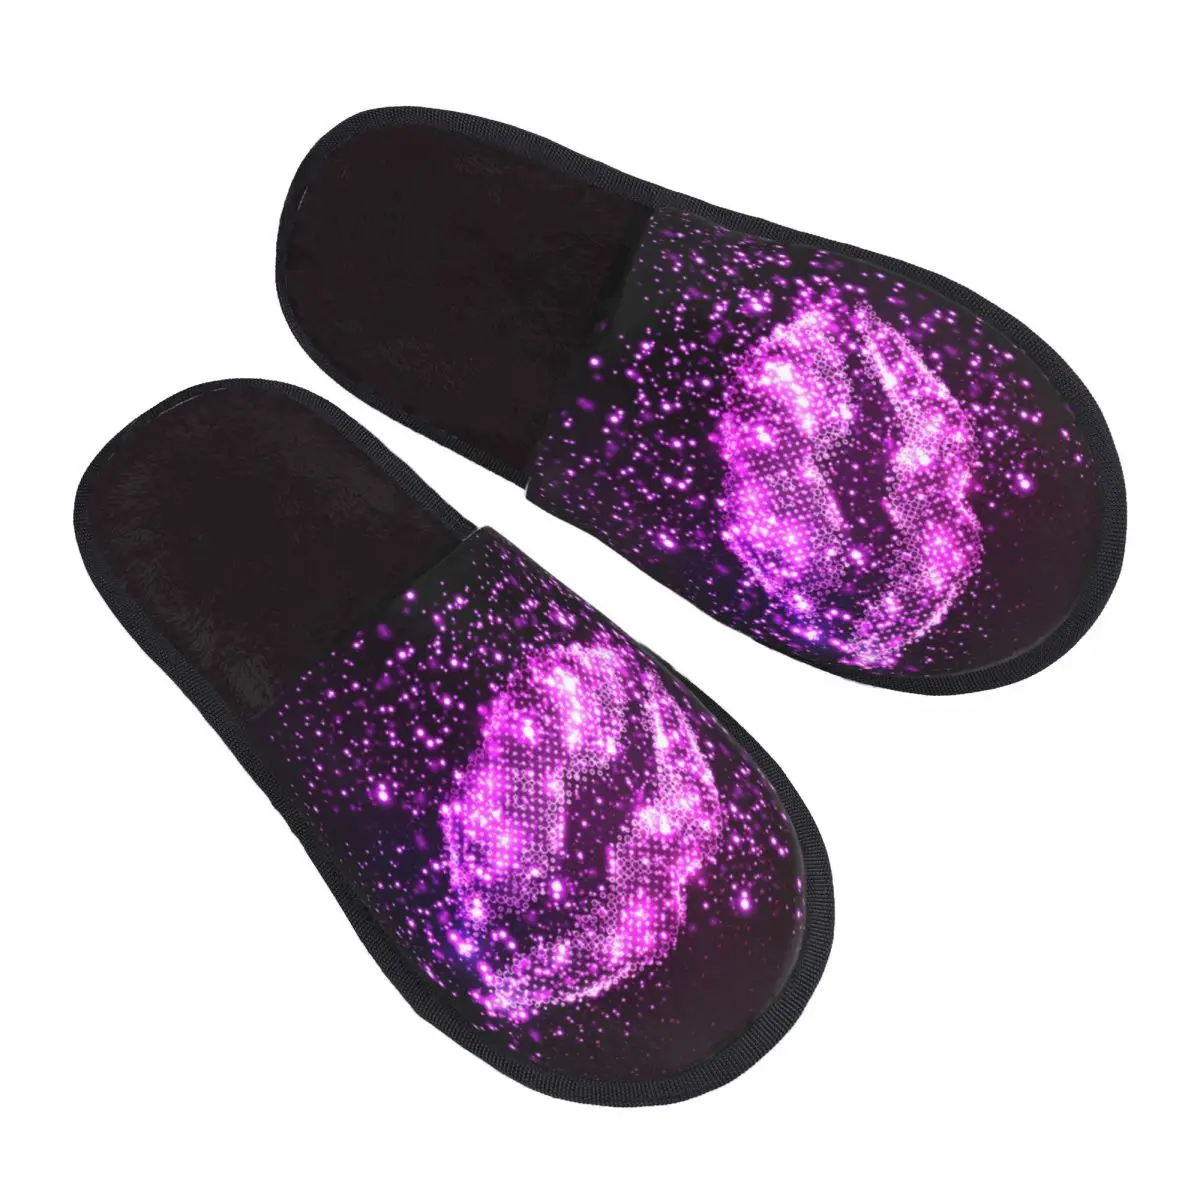 

Indoor Slippers Bright Purple Lips Illustration Plush Slipper Autumn Winter Shoes House Flat Floor for Bedroom